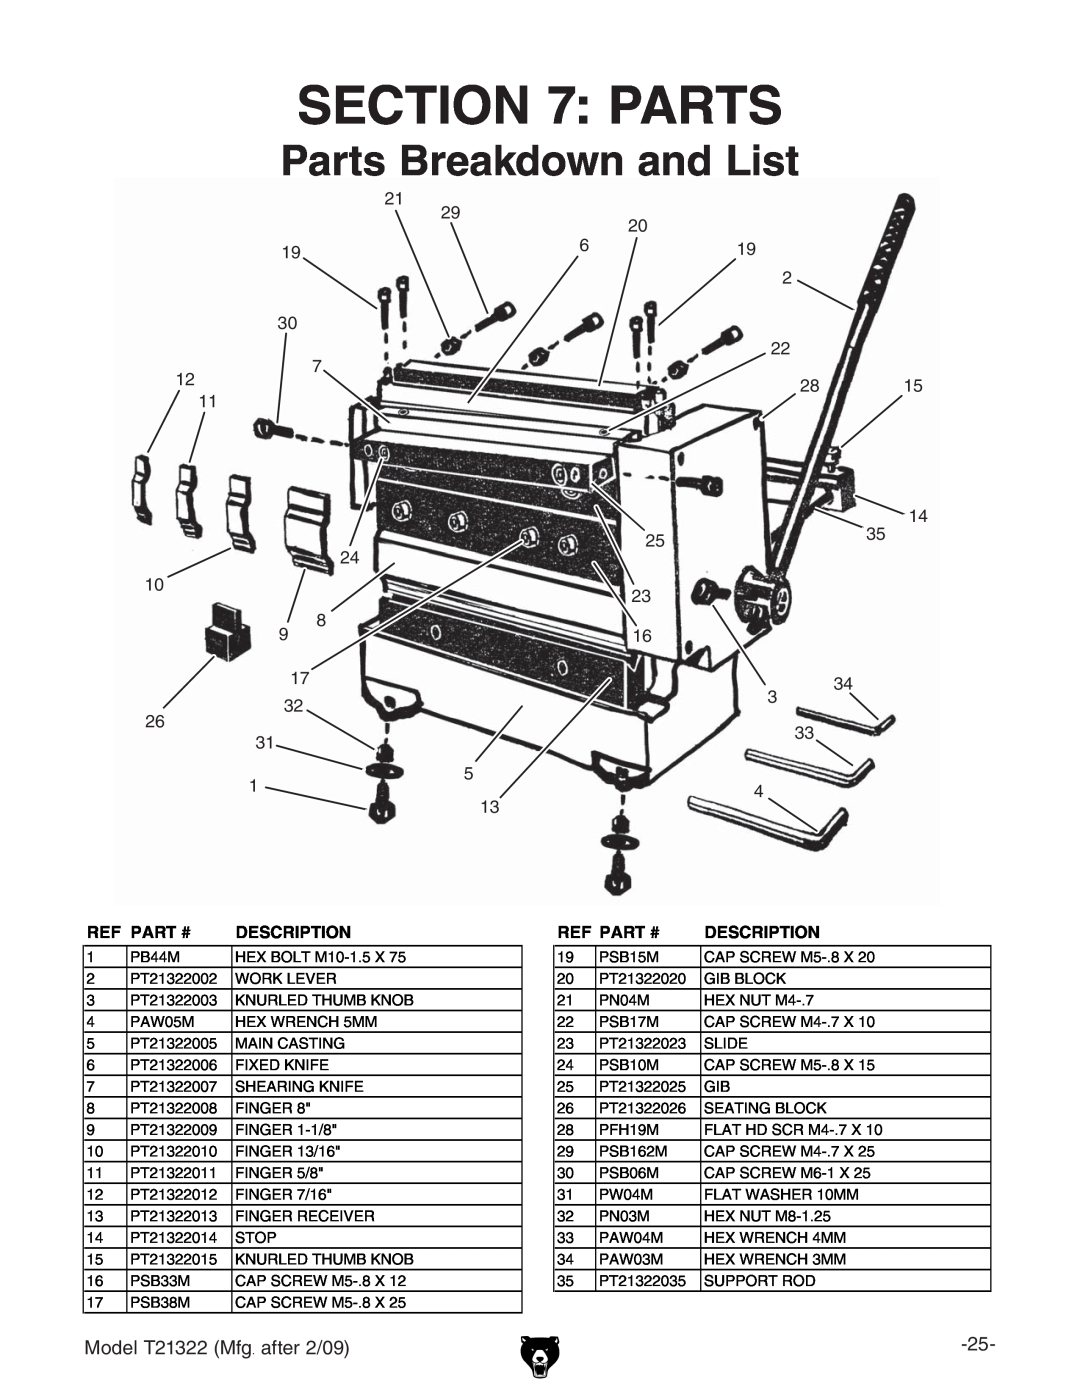 Grizzly T21322 owner manual Parts Breakdown and List, Ref Part #, Description 